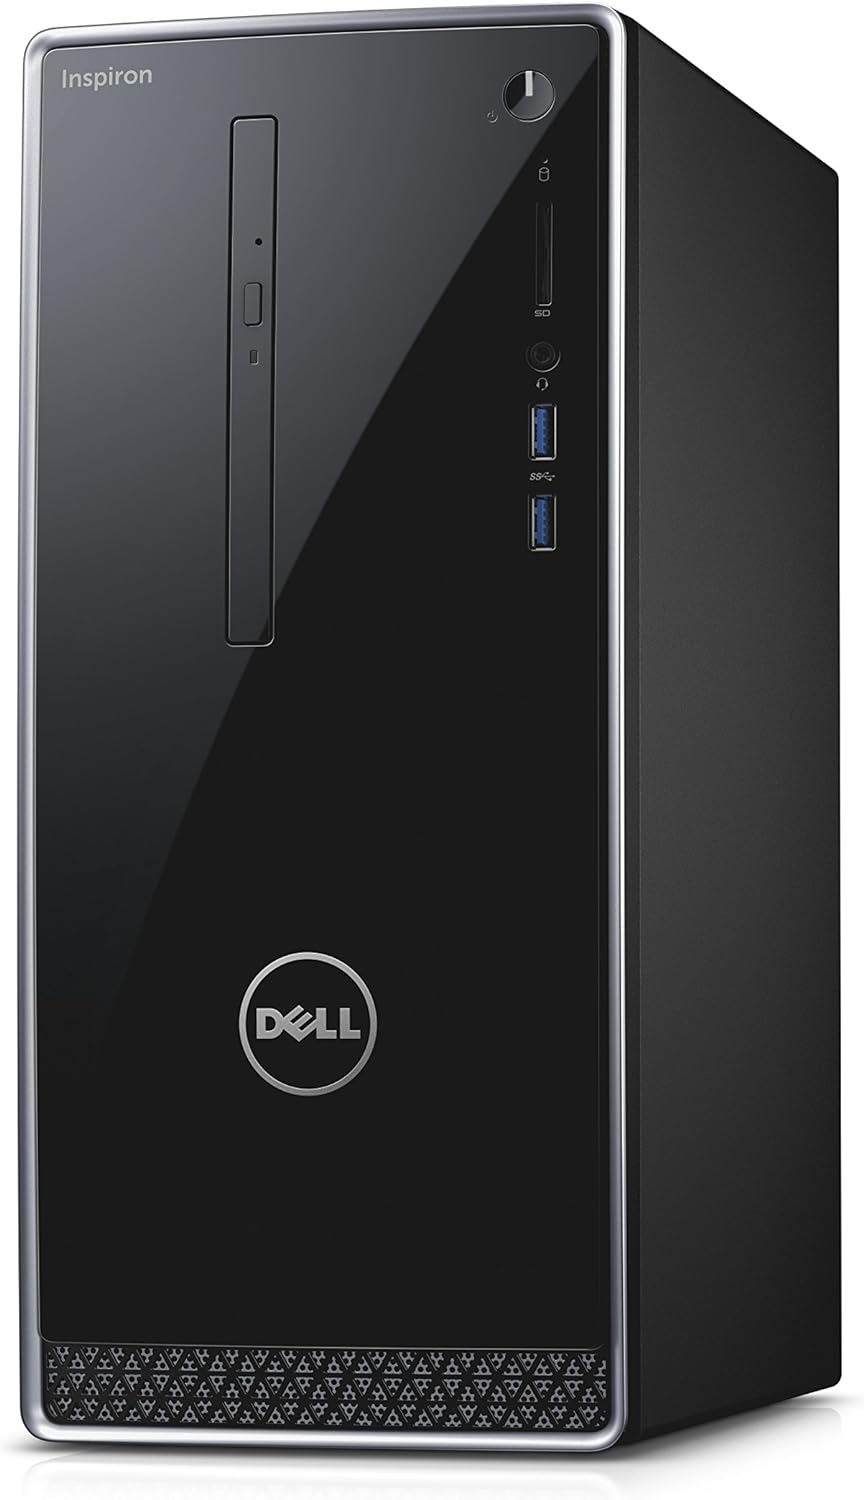 PC Desktop Dell Inspiron 3668 (i5-7ma 8GB 240GB SSD) Reacondicionado Grado A